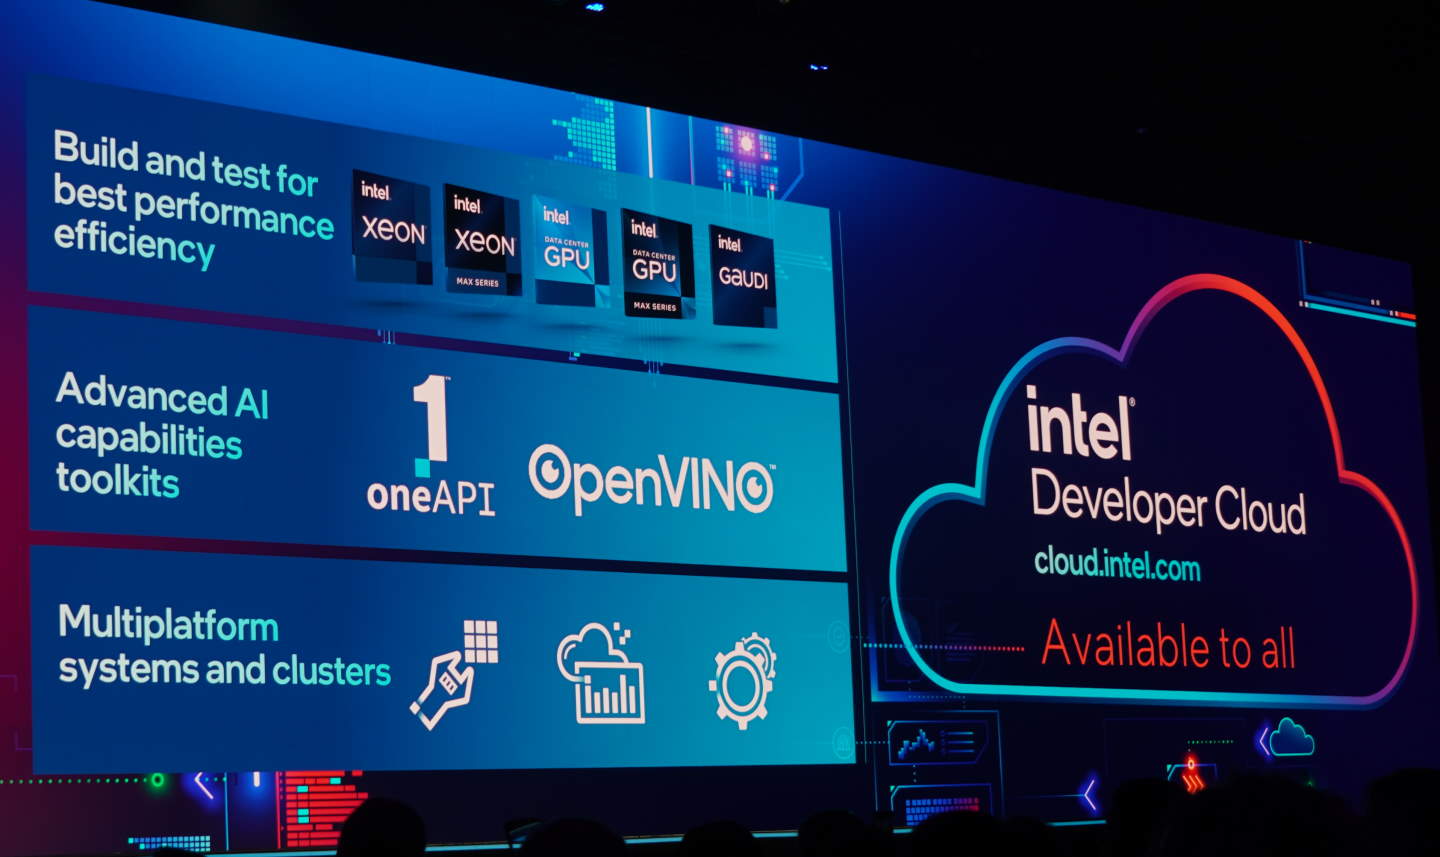 Intel Developer Cloud服務提供Xeon處理器、Xeon Max Series處理器、GPU、GPU Max Series和Gaudi 2 AI加速器各種最新的運算單元，並提供oneAPI、OpenVINO開發套件。